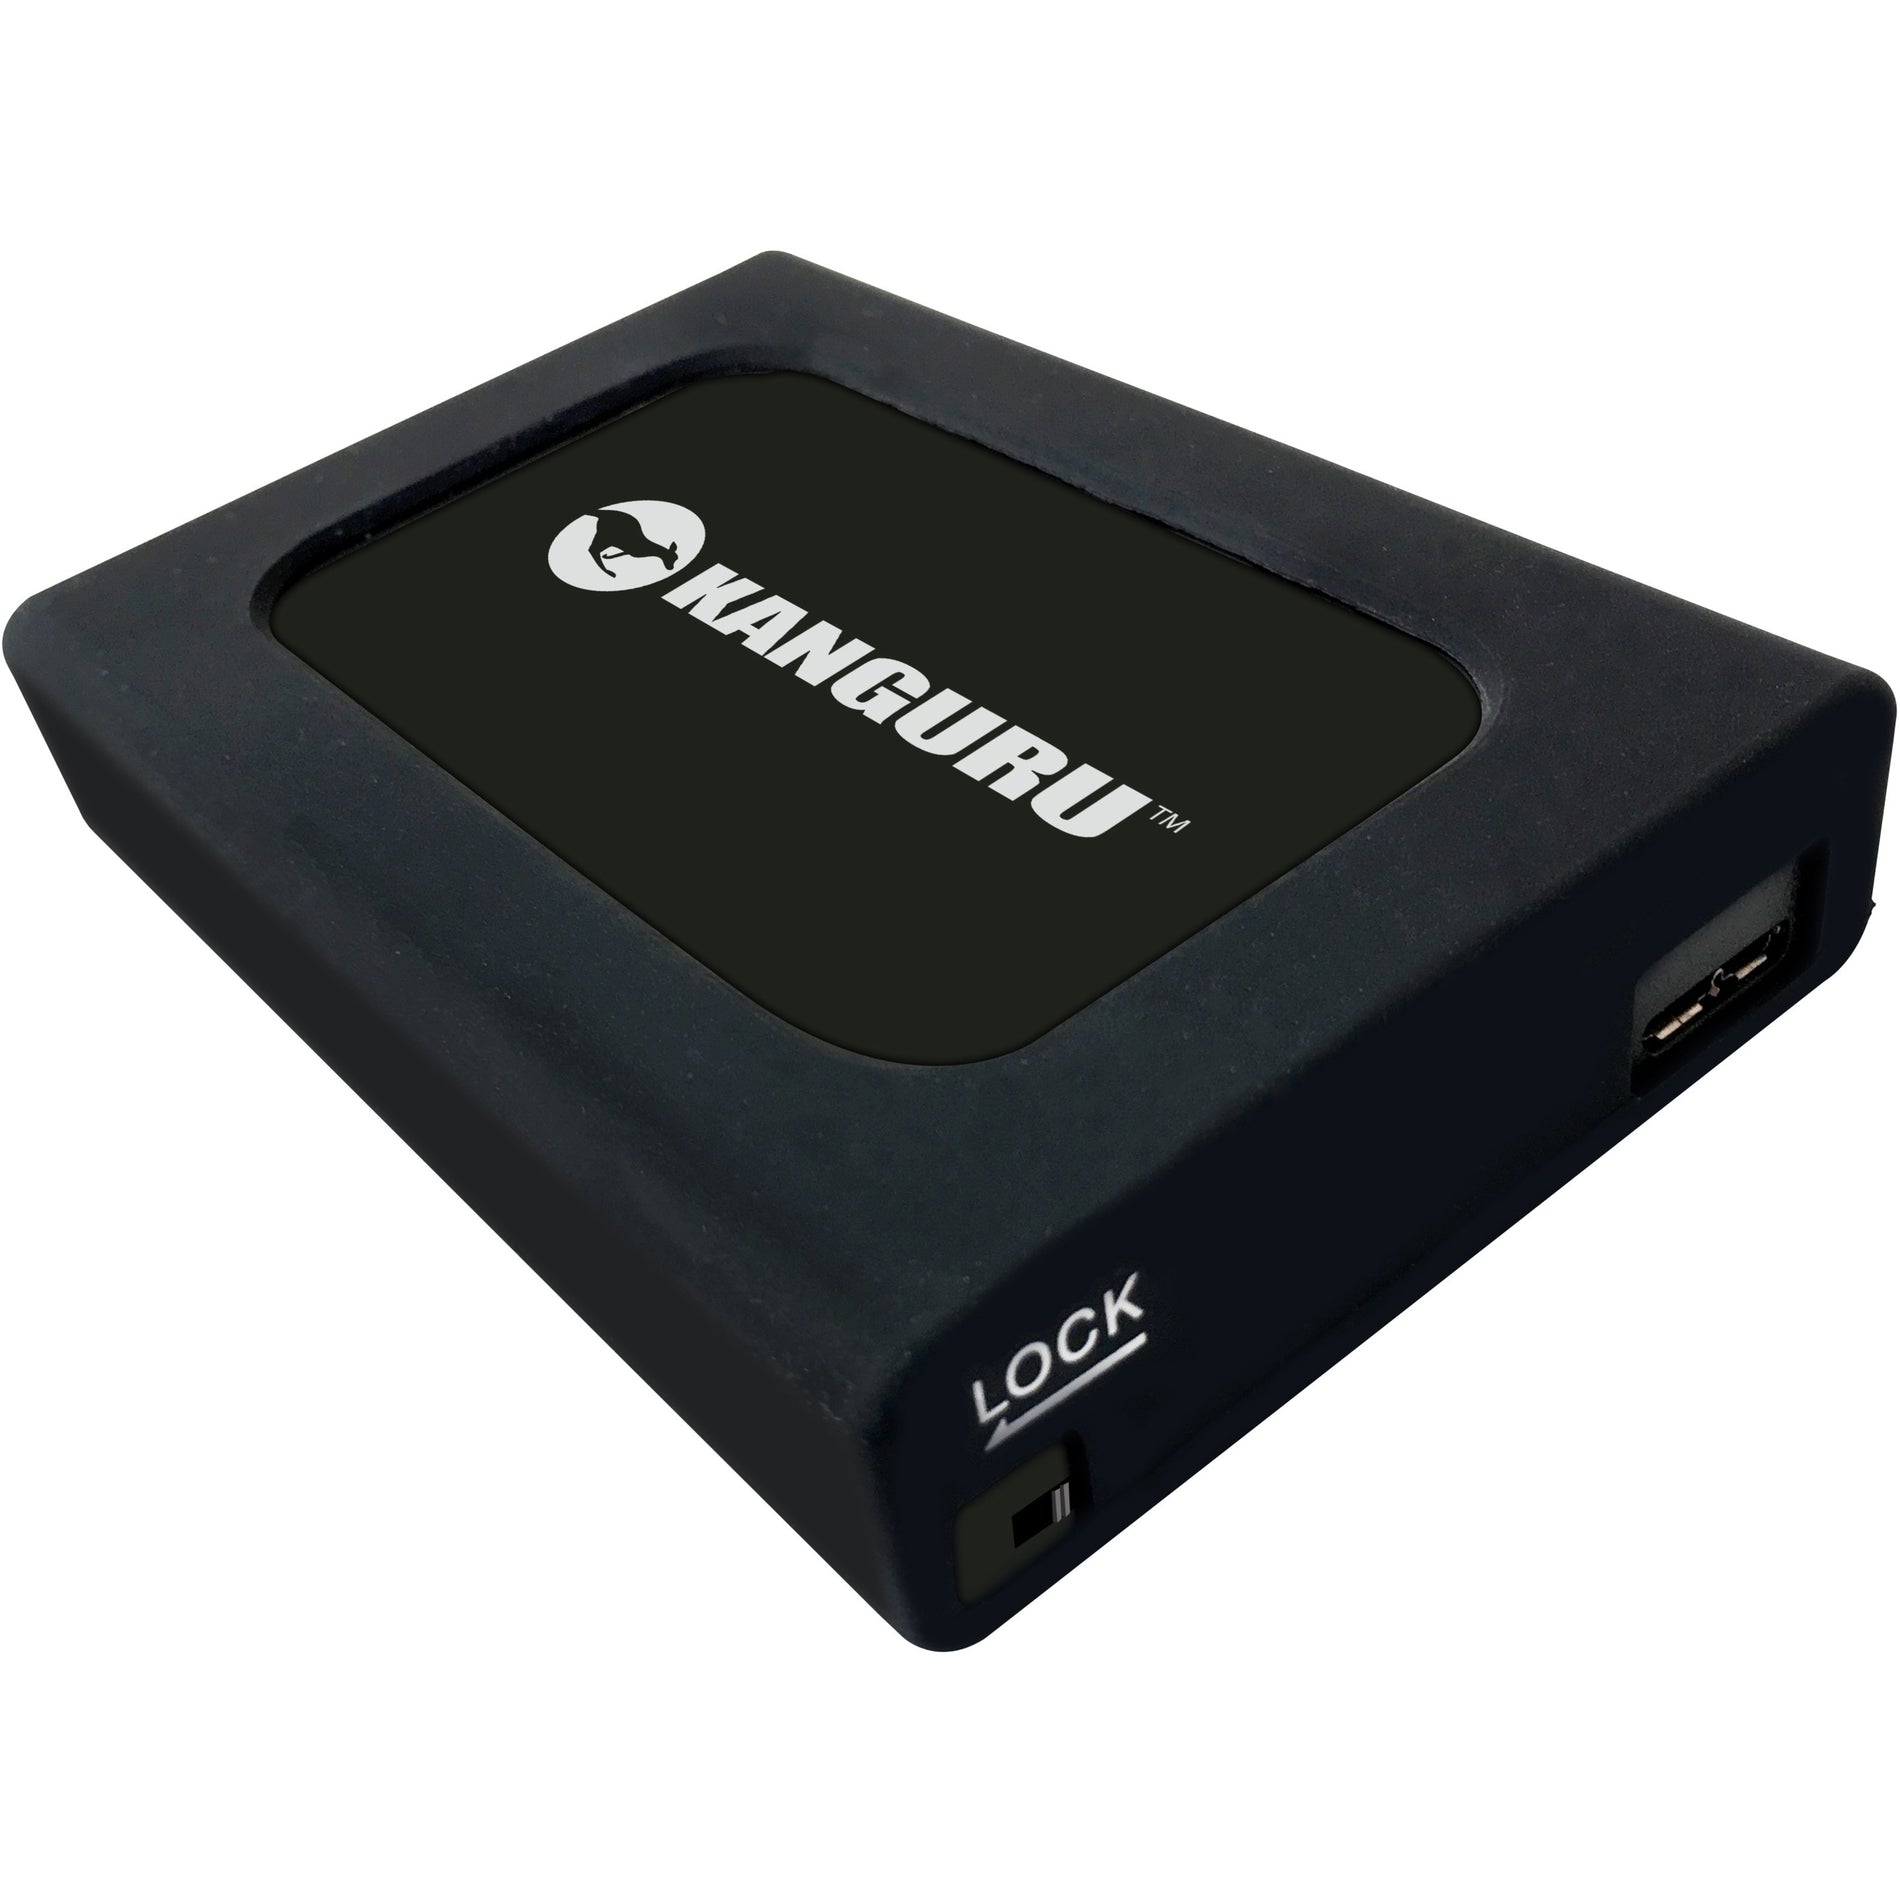 Kanguru U3-2HDWP-480S UltraLock USB 3.0 SSD with Write Protect Switch, 480GB Solid State Drive